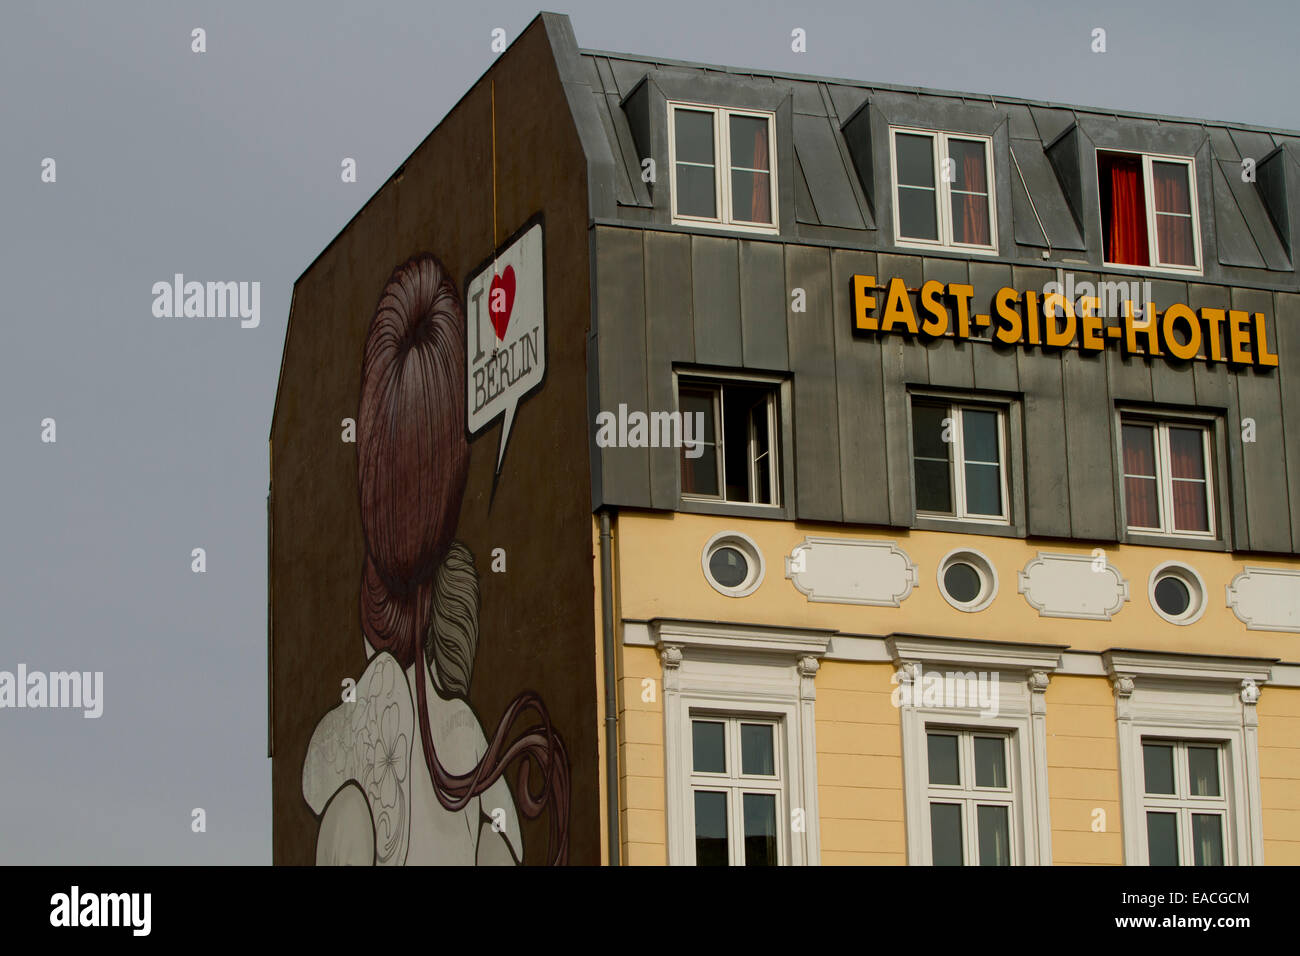 J'adore Berlin hotel Graffiti Art urbain building Banque D'Images